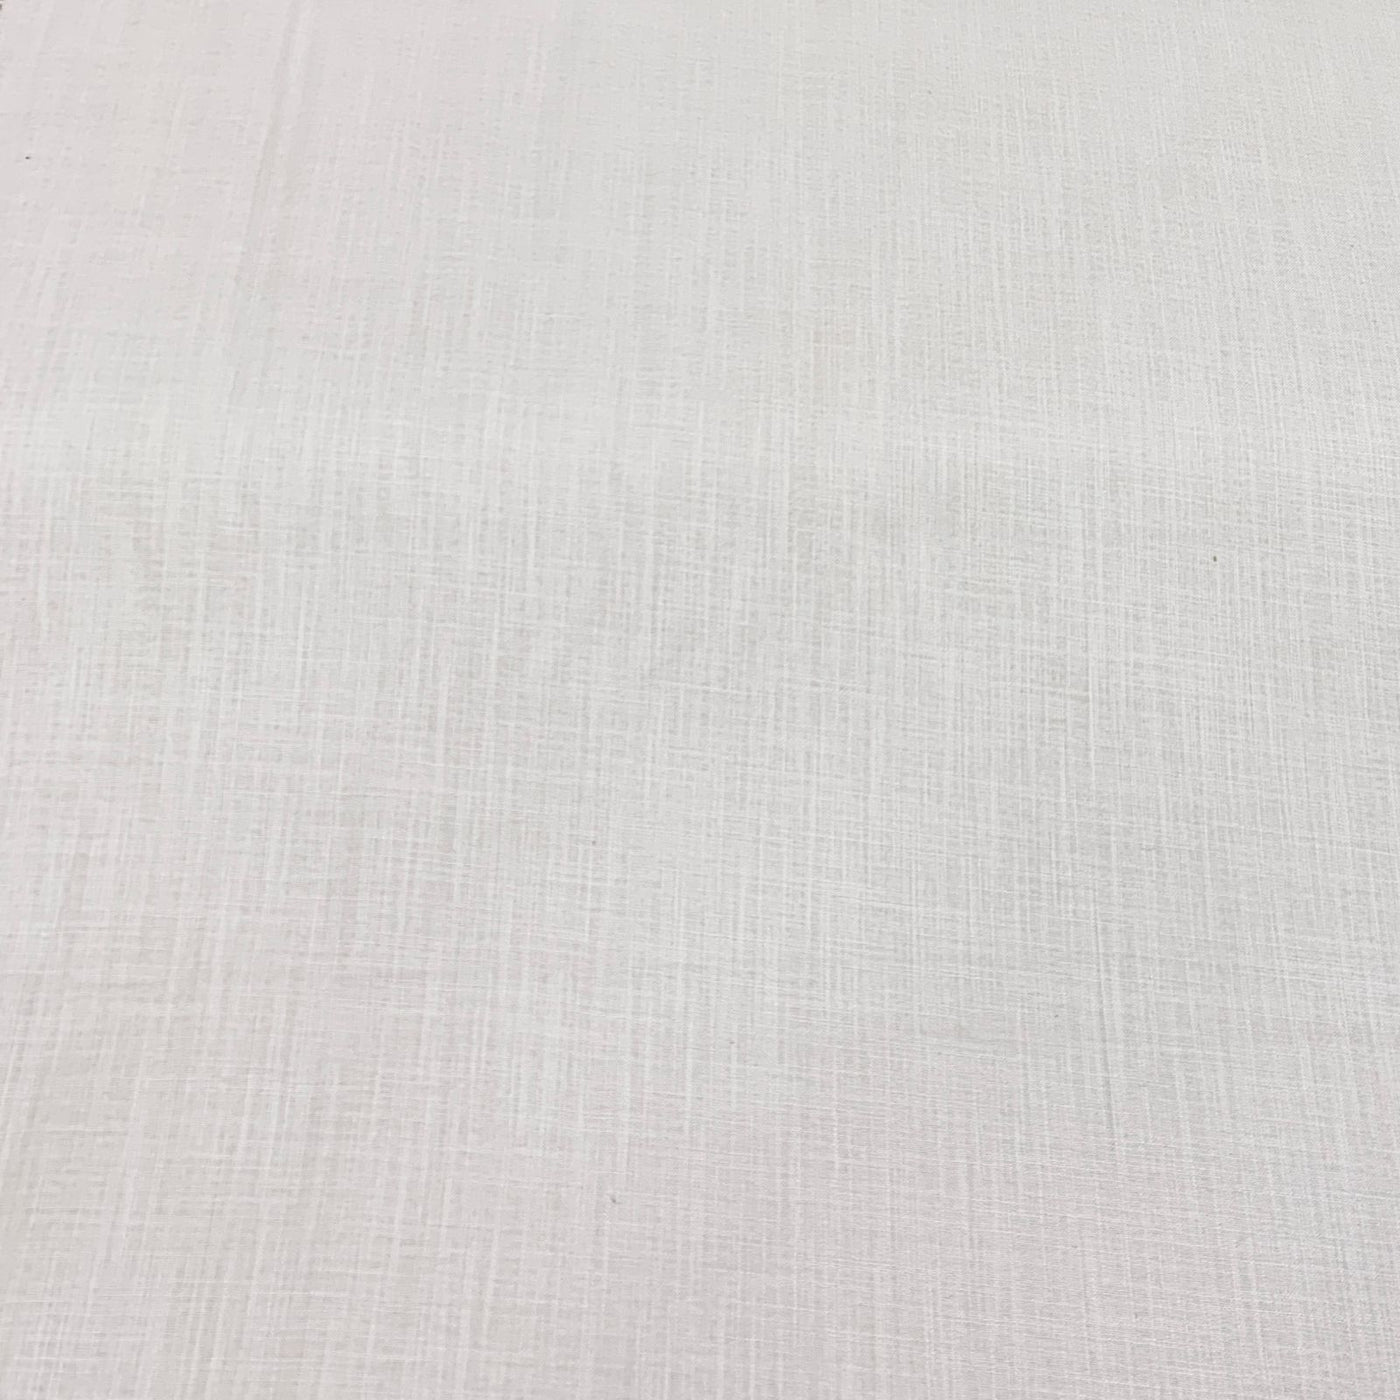 Biscuit Beige Plain Cotton Matka Fabric